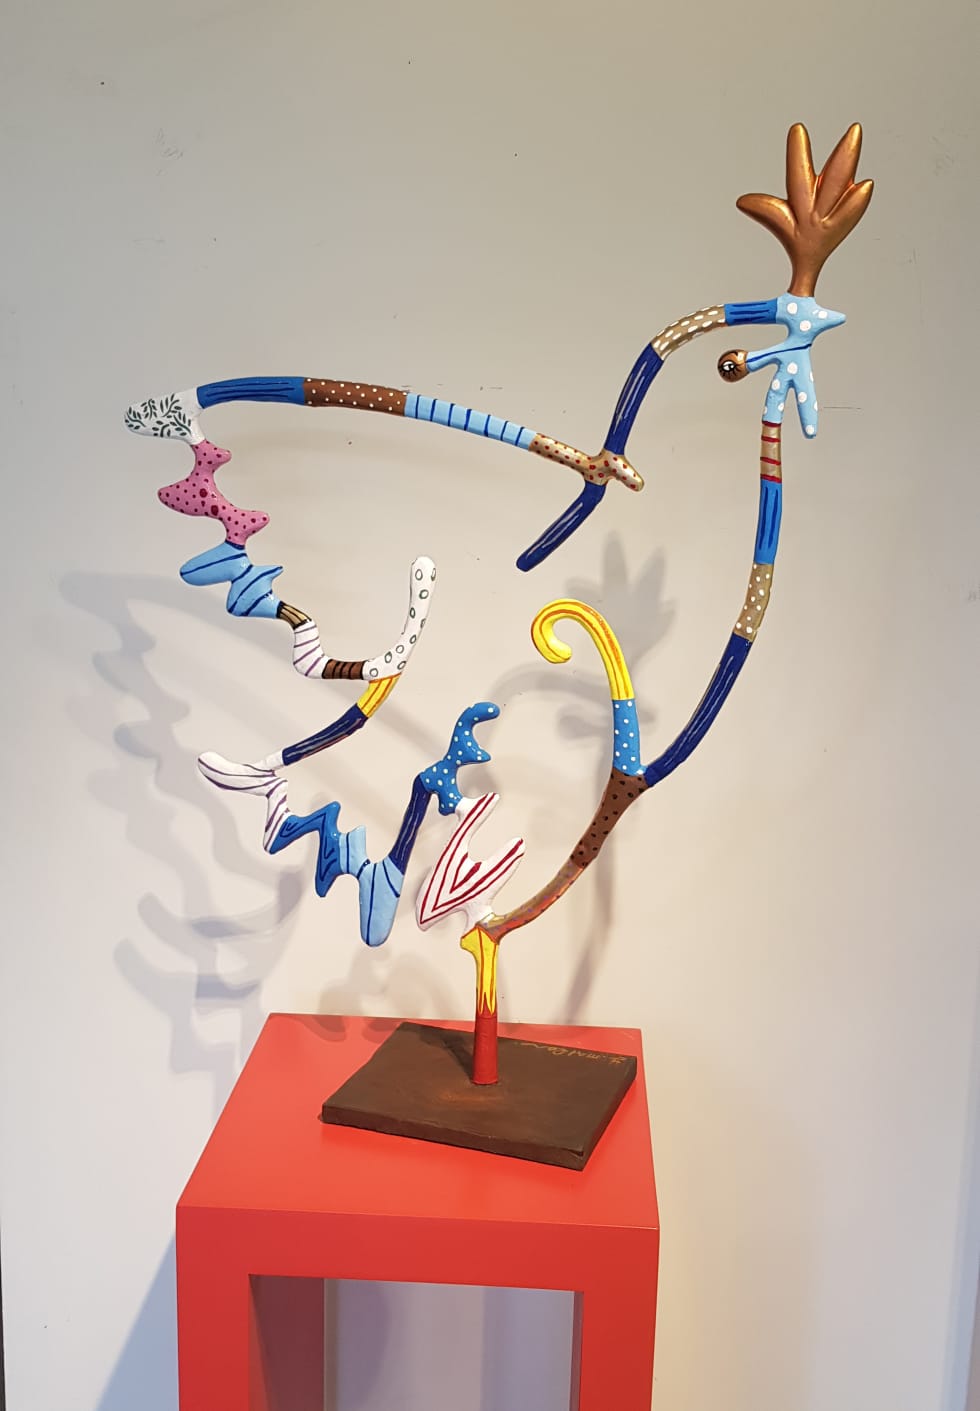 Art time gallery Jerusalem(Art online) -  YUVAL MAHLER - Peace Dove - Original Metal Sculpture - 89 x 69 cm / 35 x 27 inches